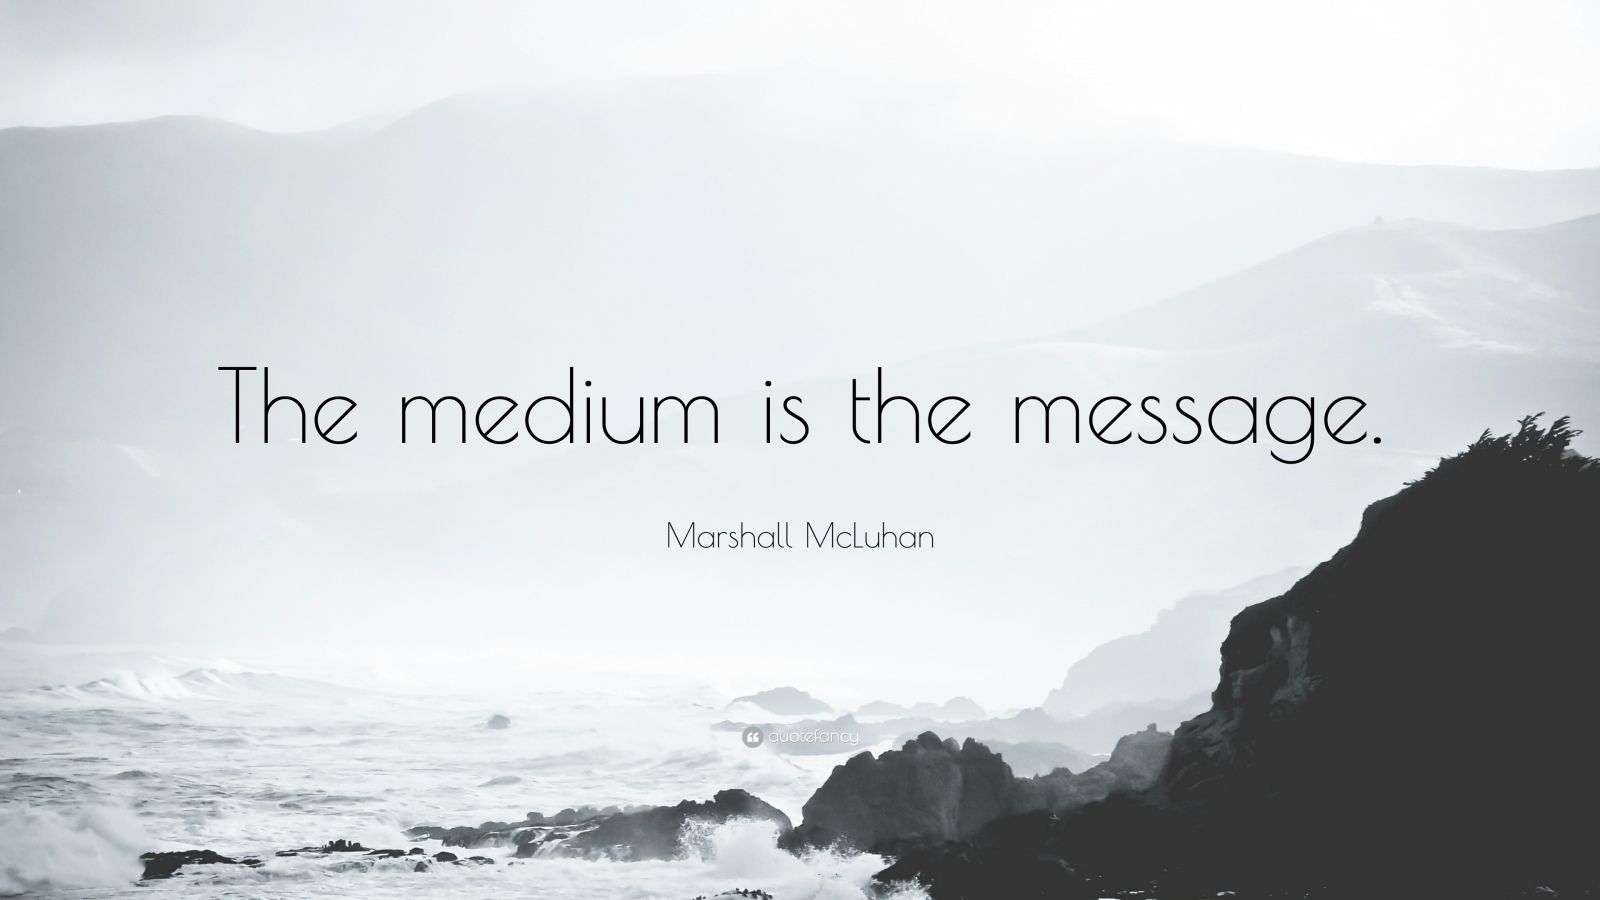 Medium is the Message